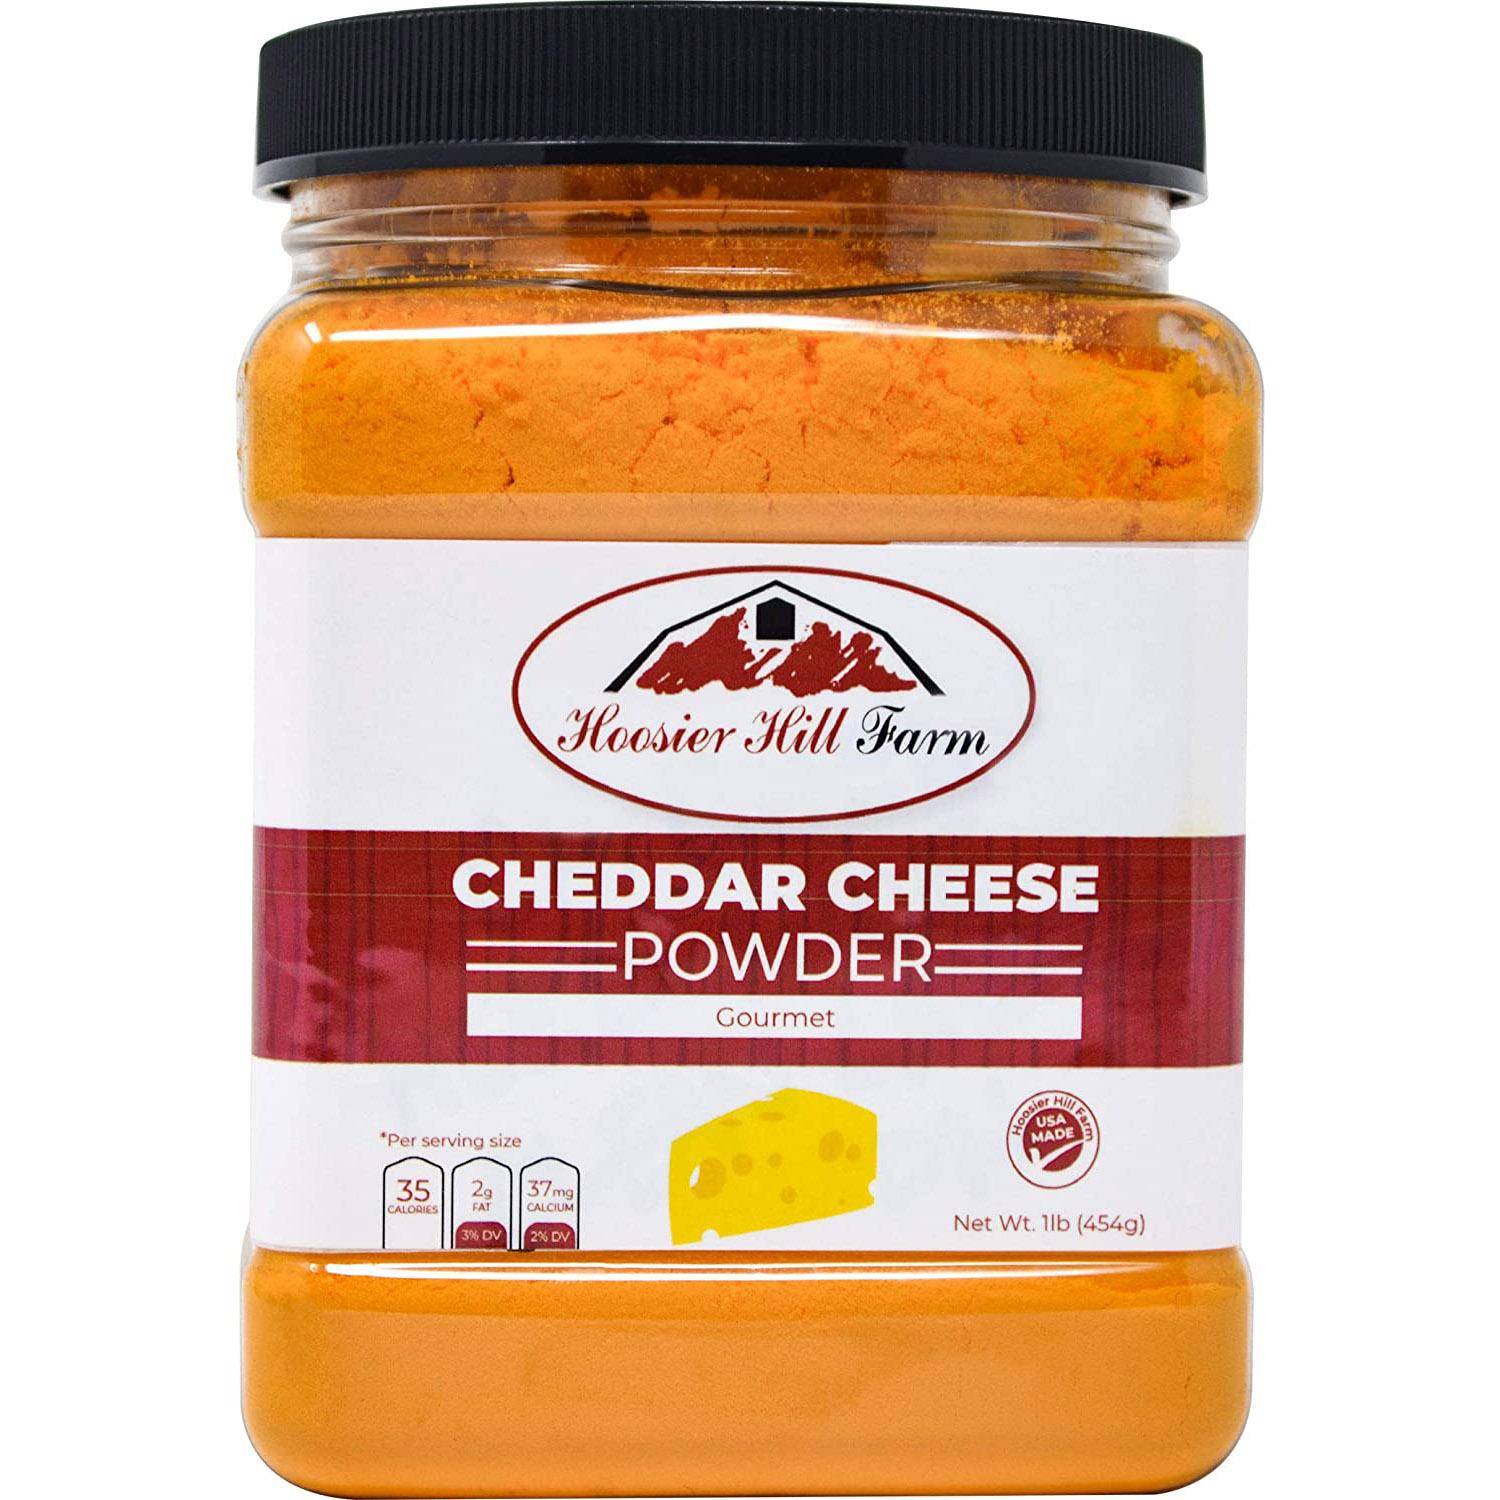 1-lb Hoosier Hill Farm Cheddar Cheese Powder for $7.31 Shipped